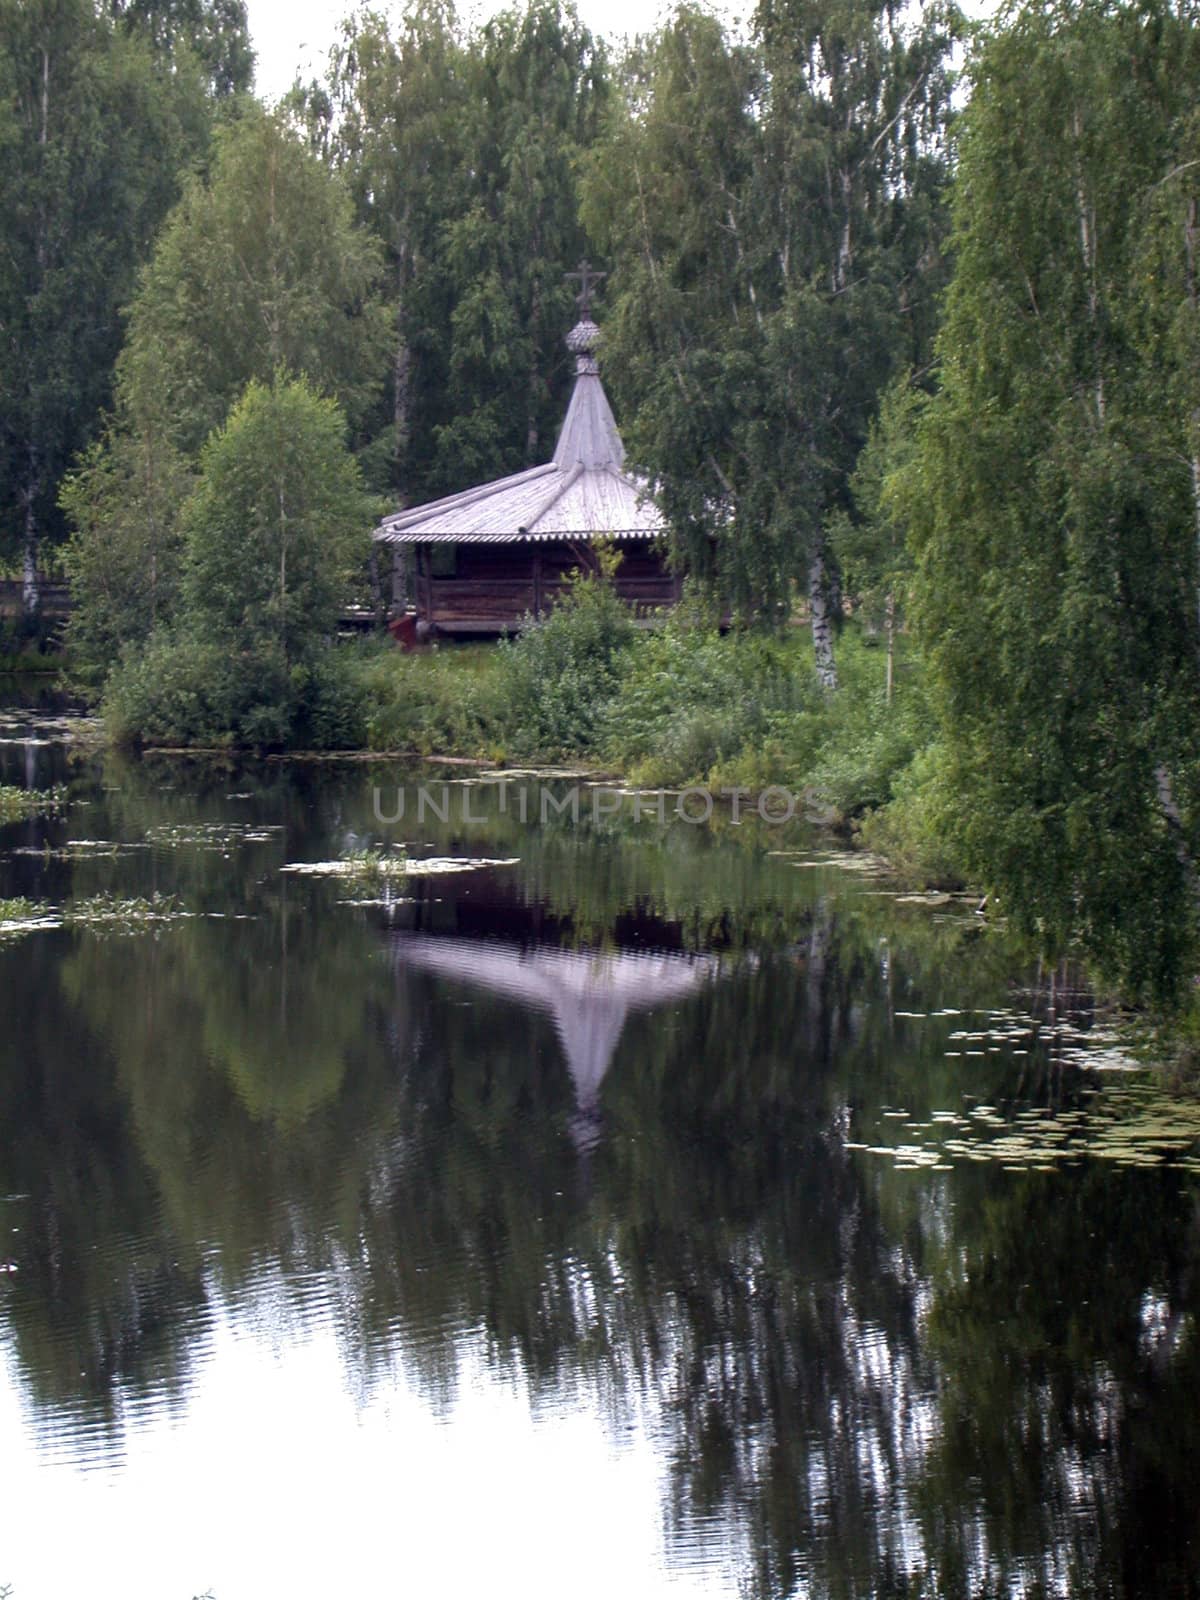 Ipetievskiy monastery, orthodox, Kostroma, Russia